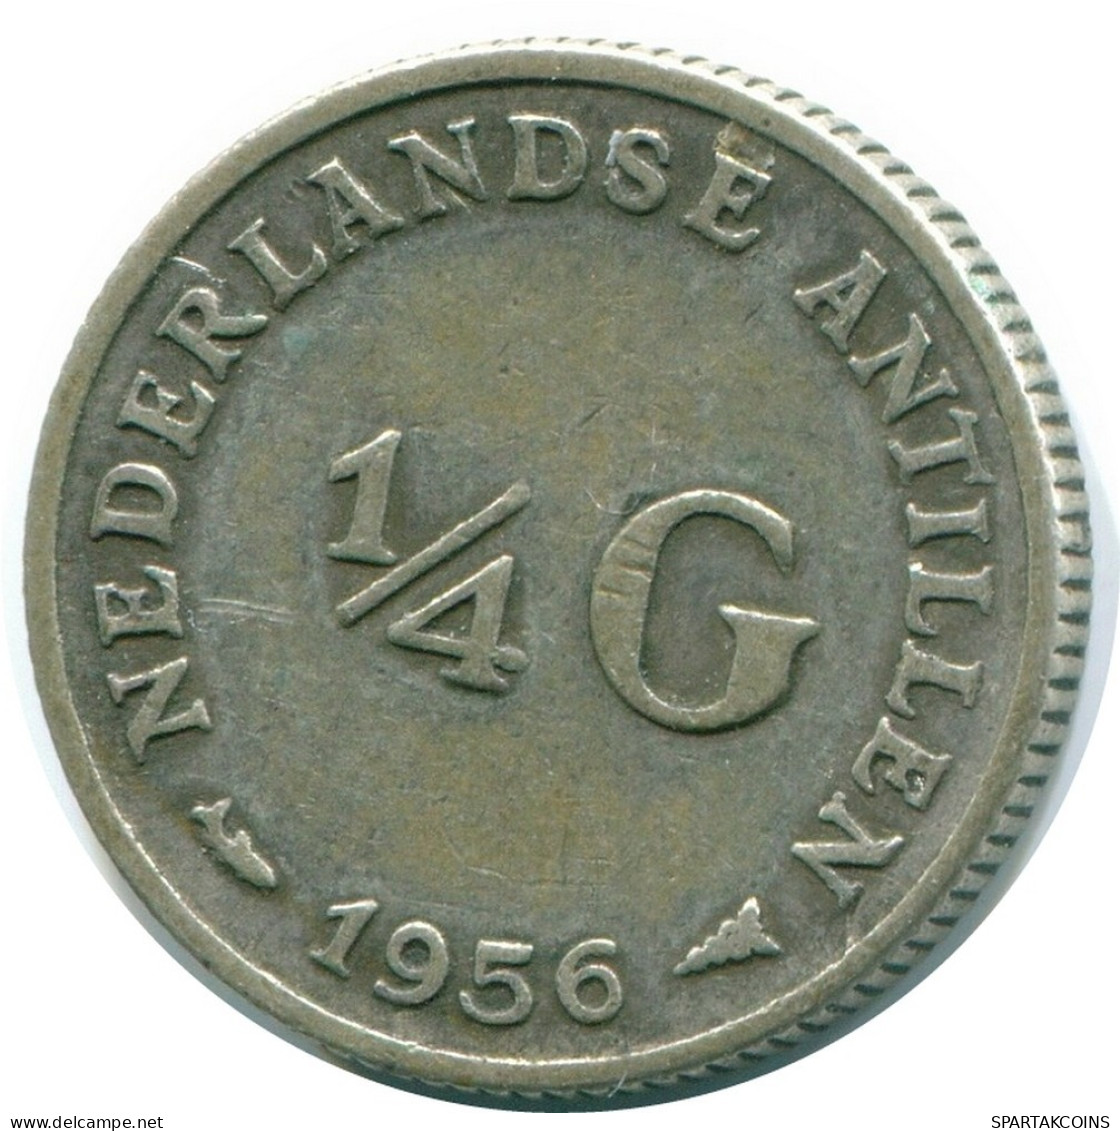 1/4 GULDEN 1956 NETHERLANDS ANTILLES SILVER Colonial Coin #NL10935.4.U.A - Niederländische Antillen